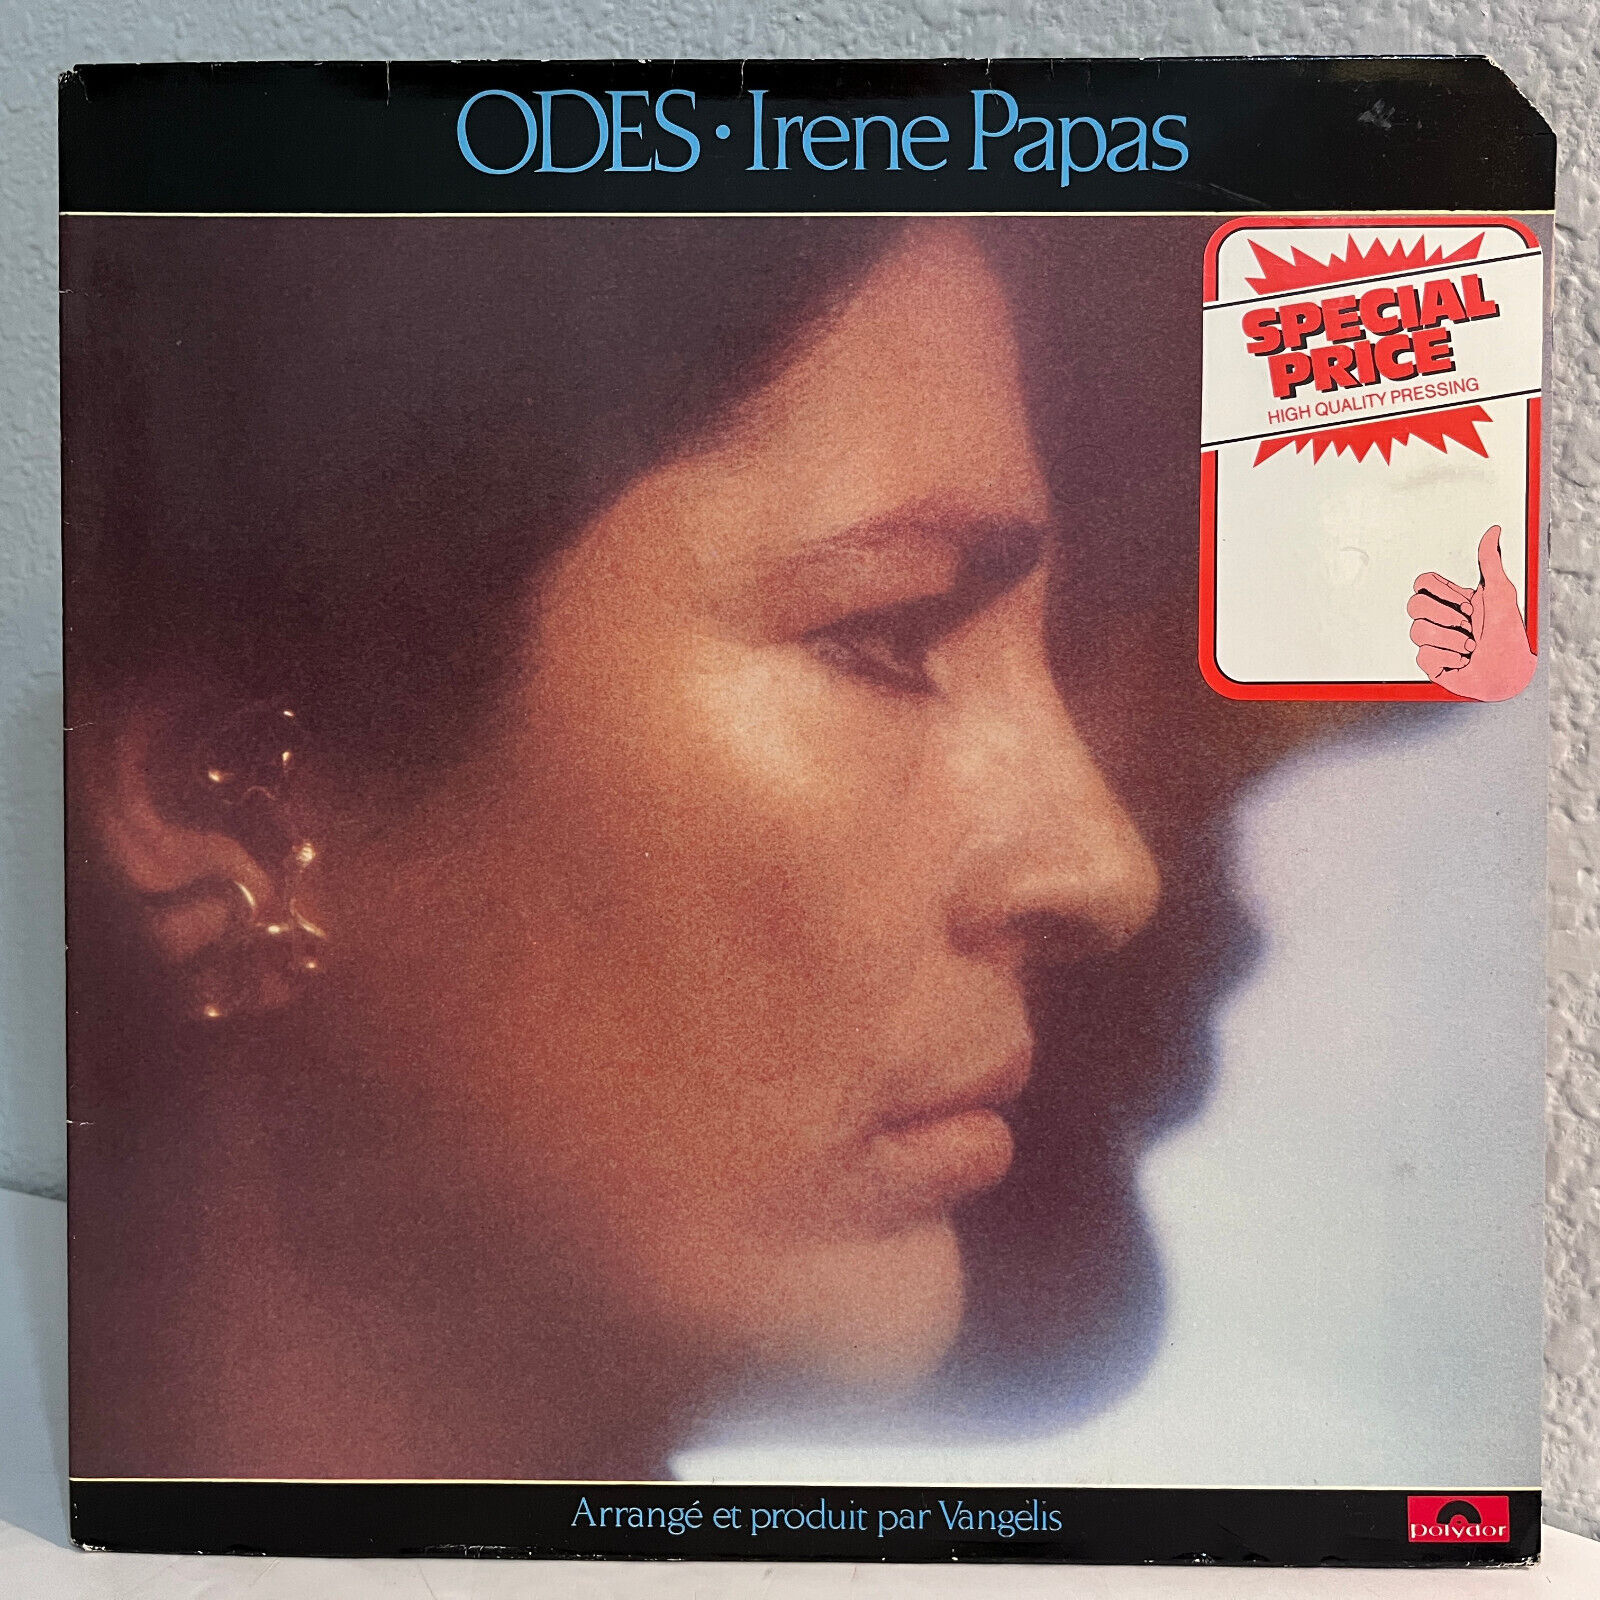 IRENE PAPAS - Odes (Polydor) (Holland Pressing) -12\